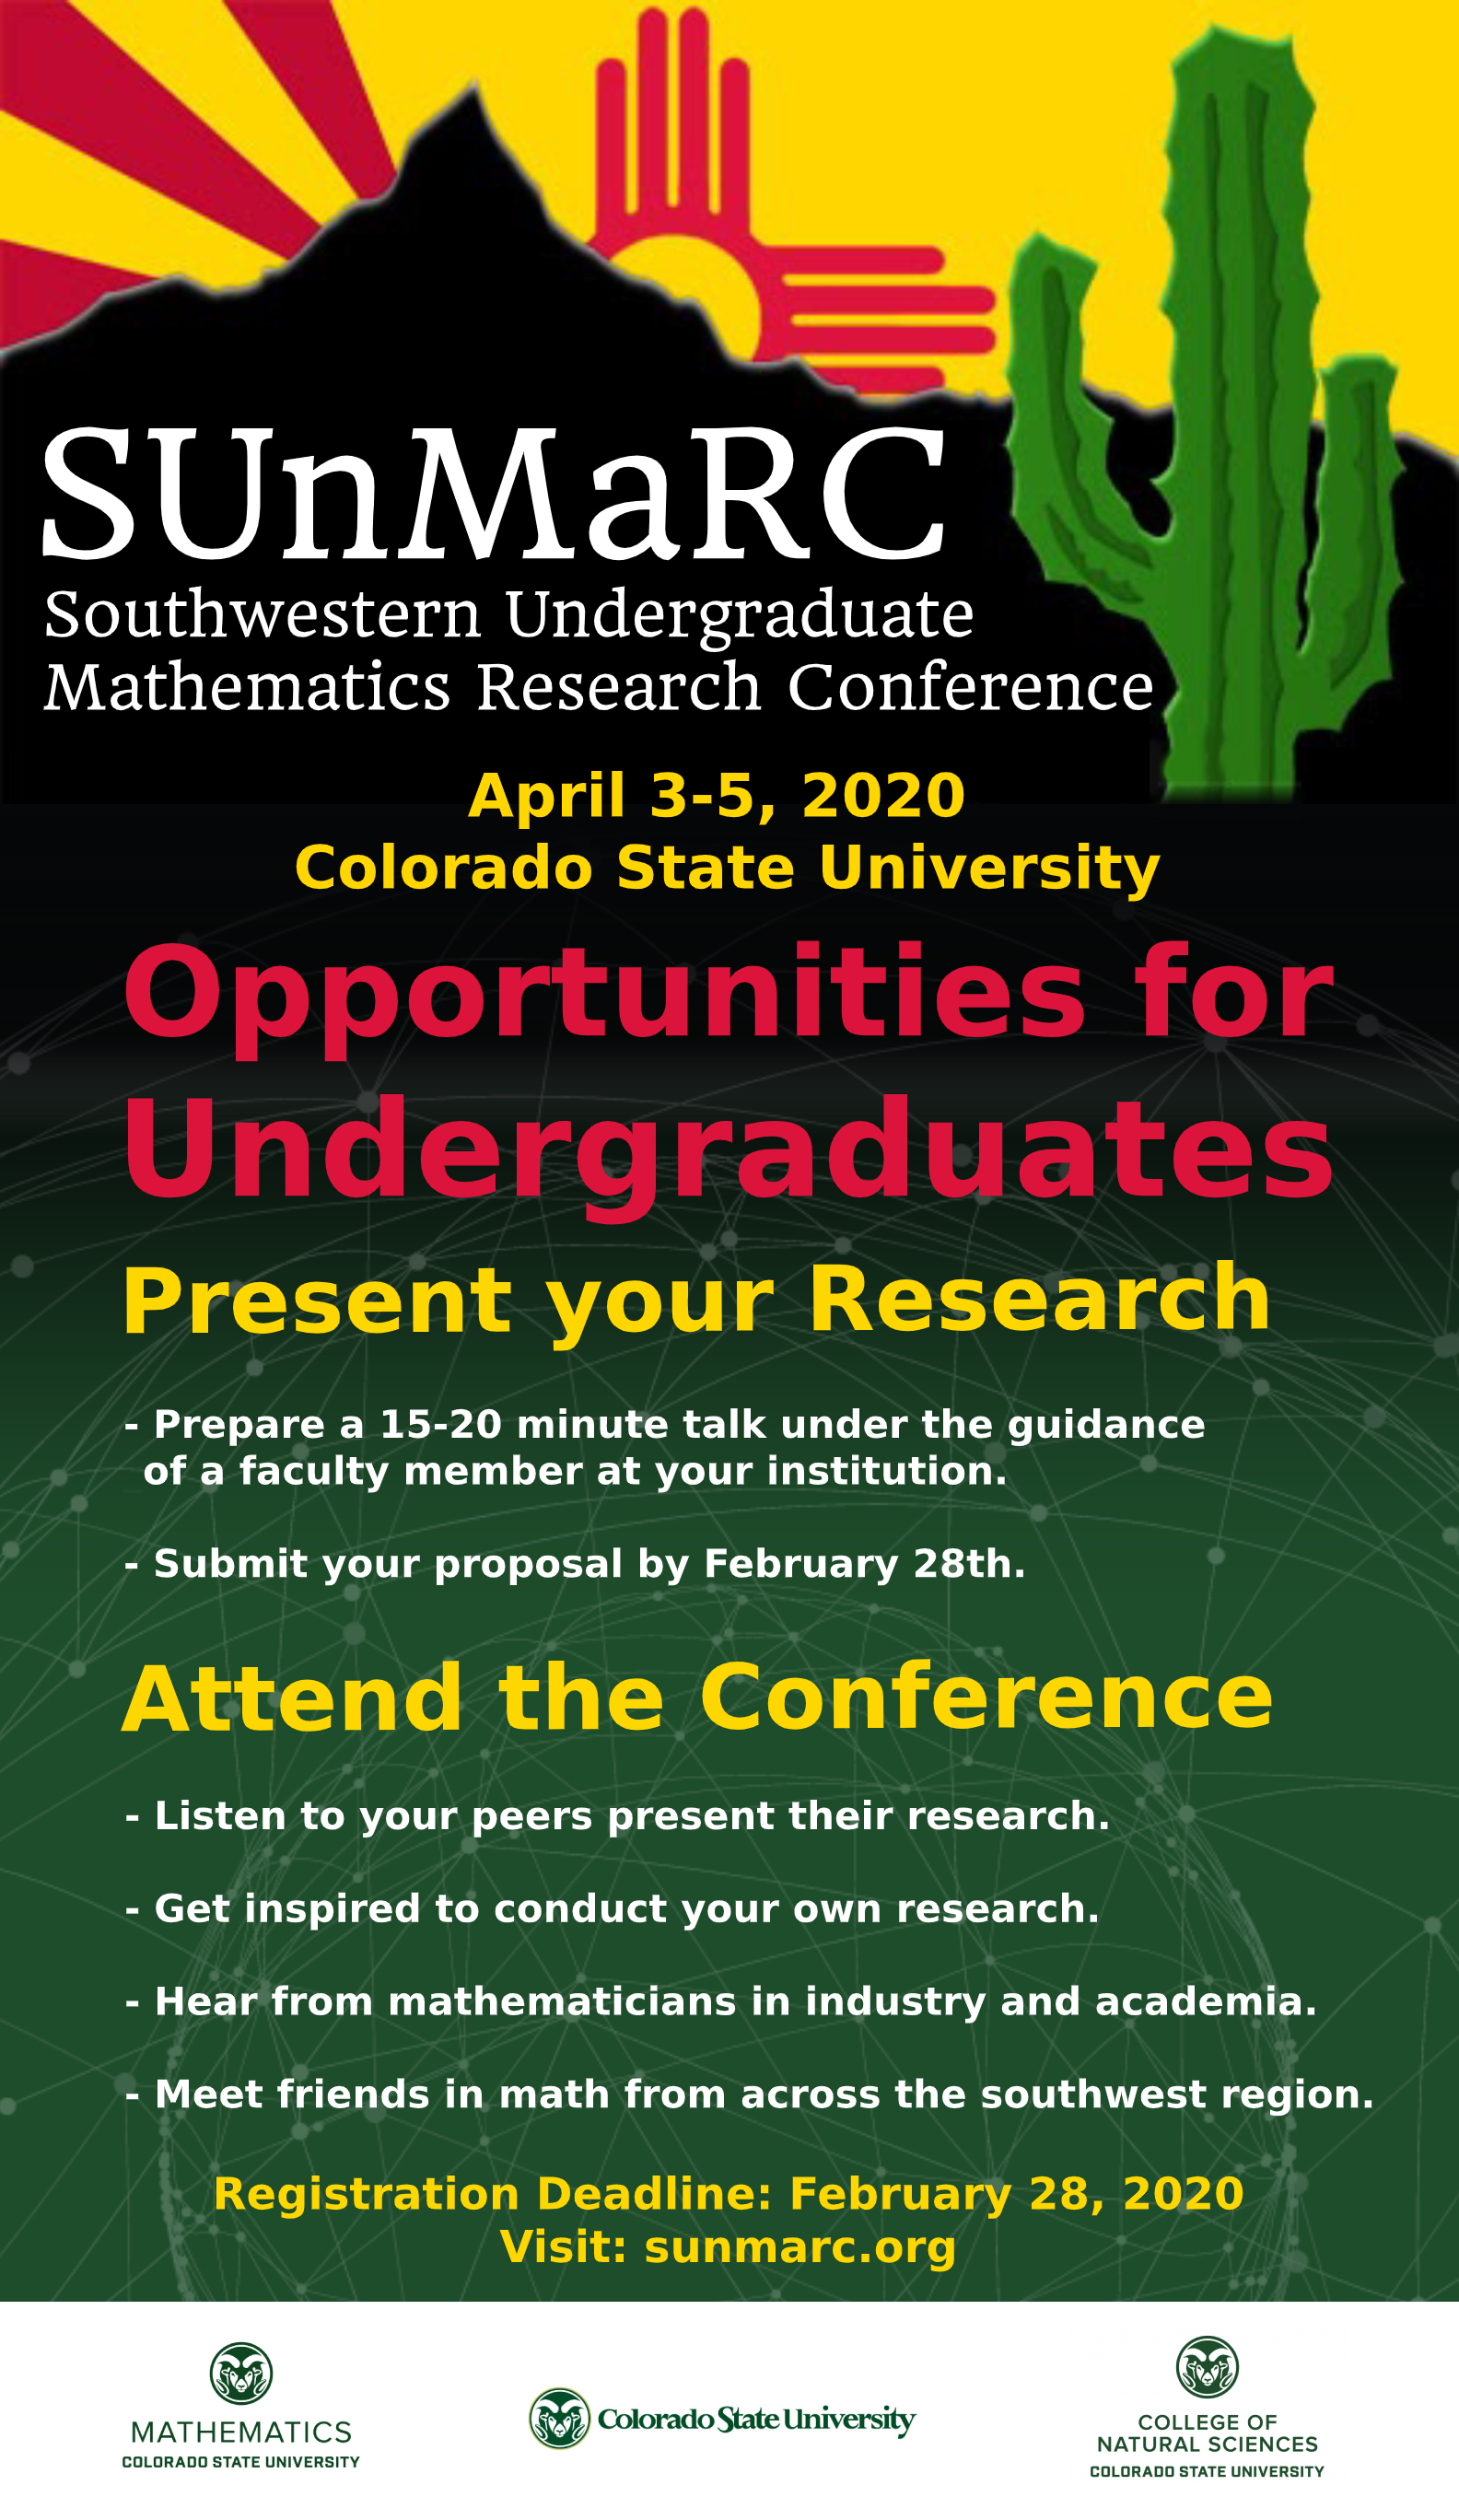 Southwestern Undergraduate Mathematics Research Conference